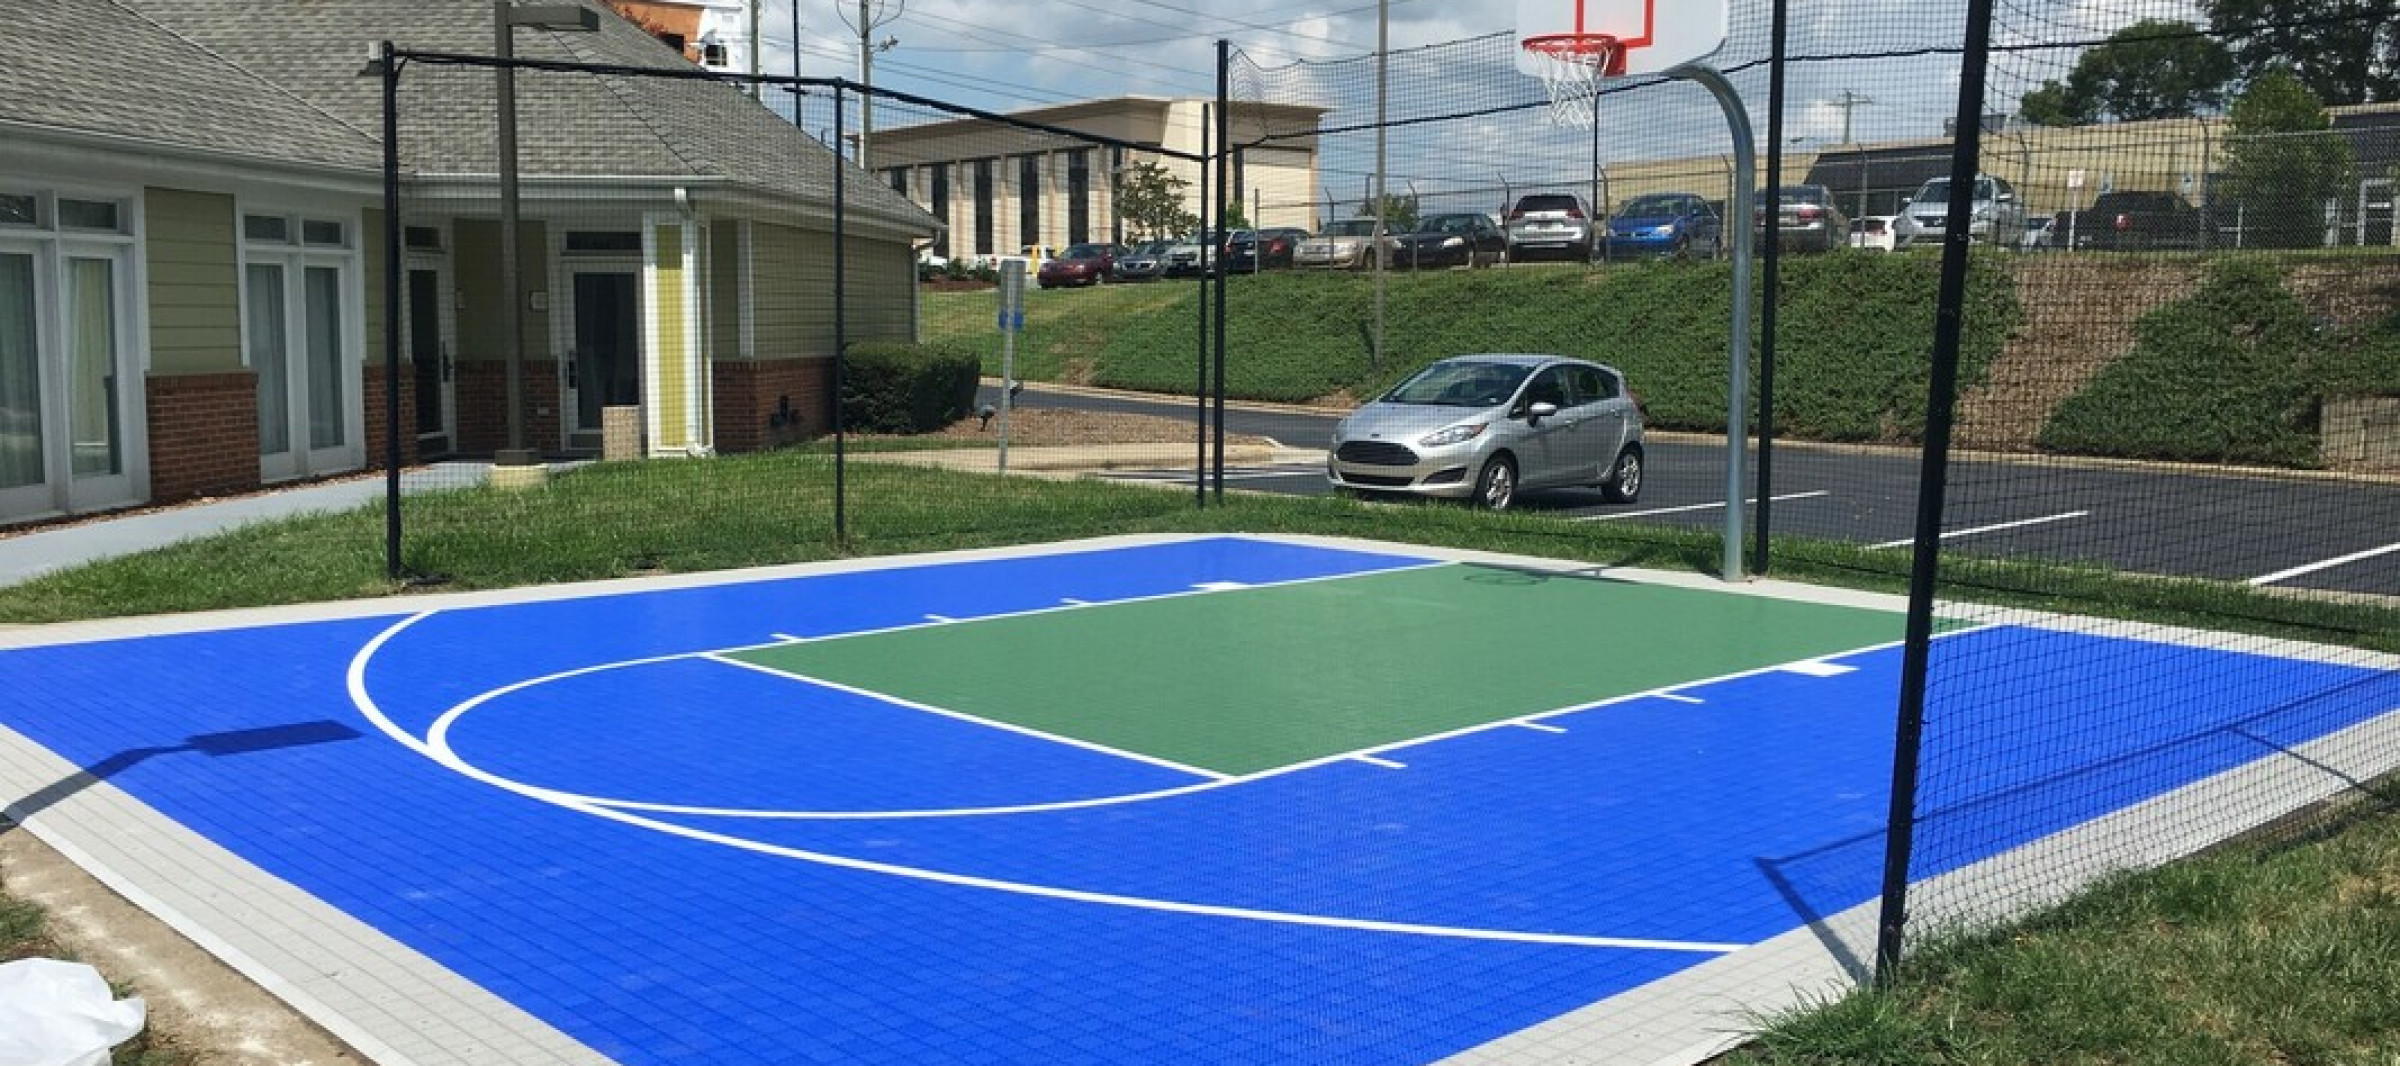 outdoor basketball court home